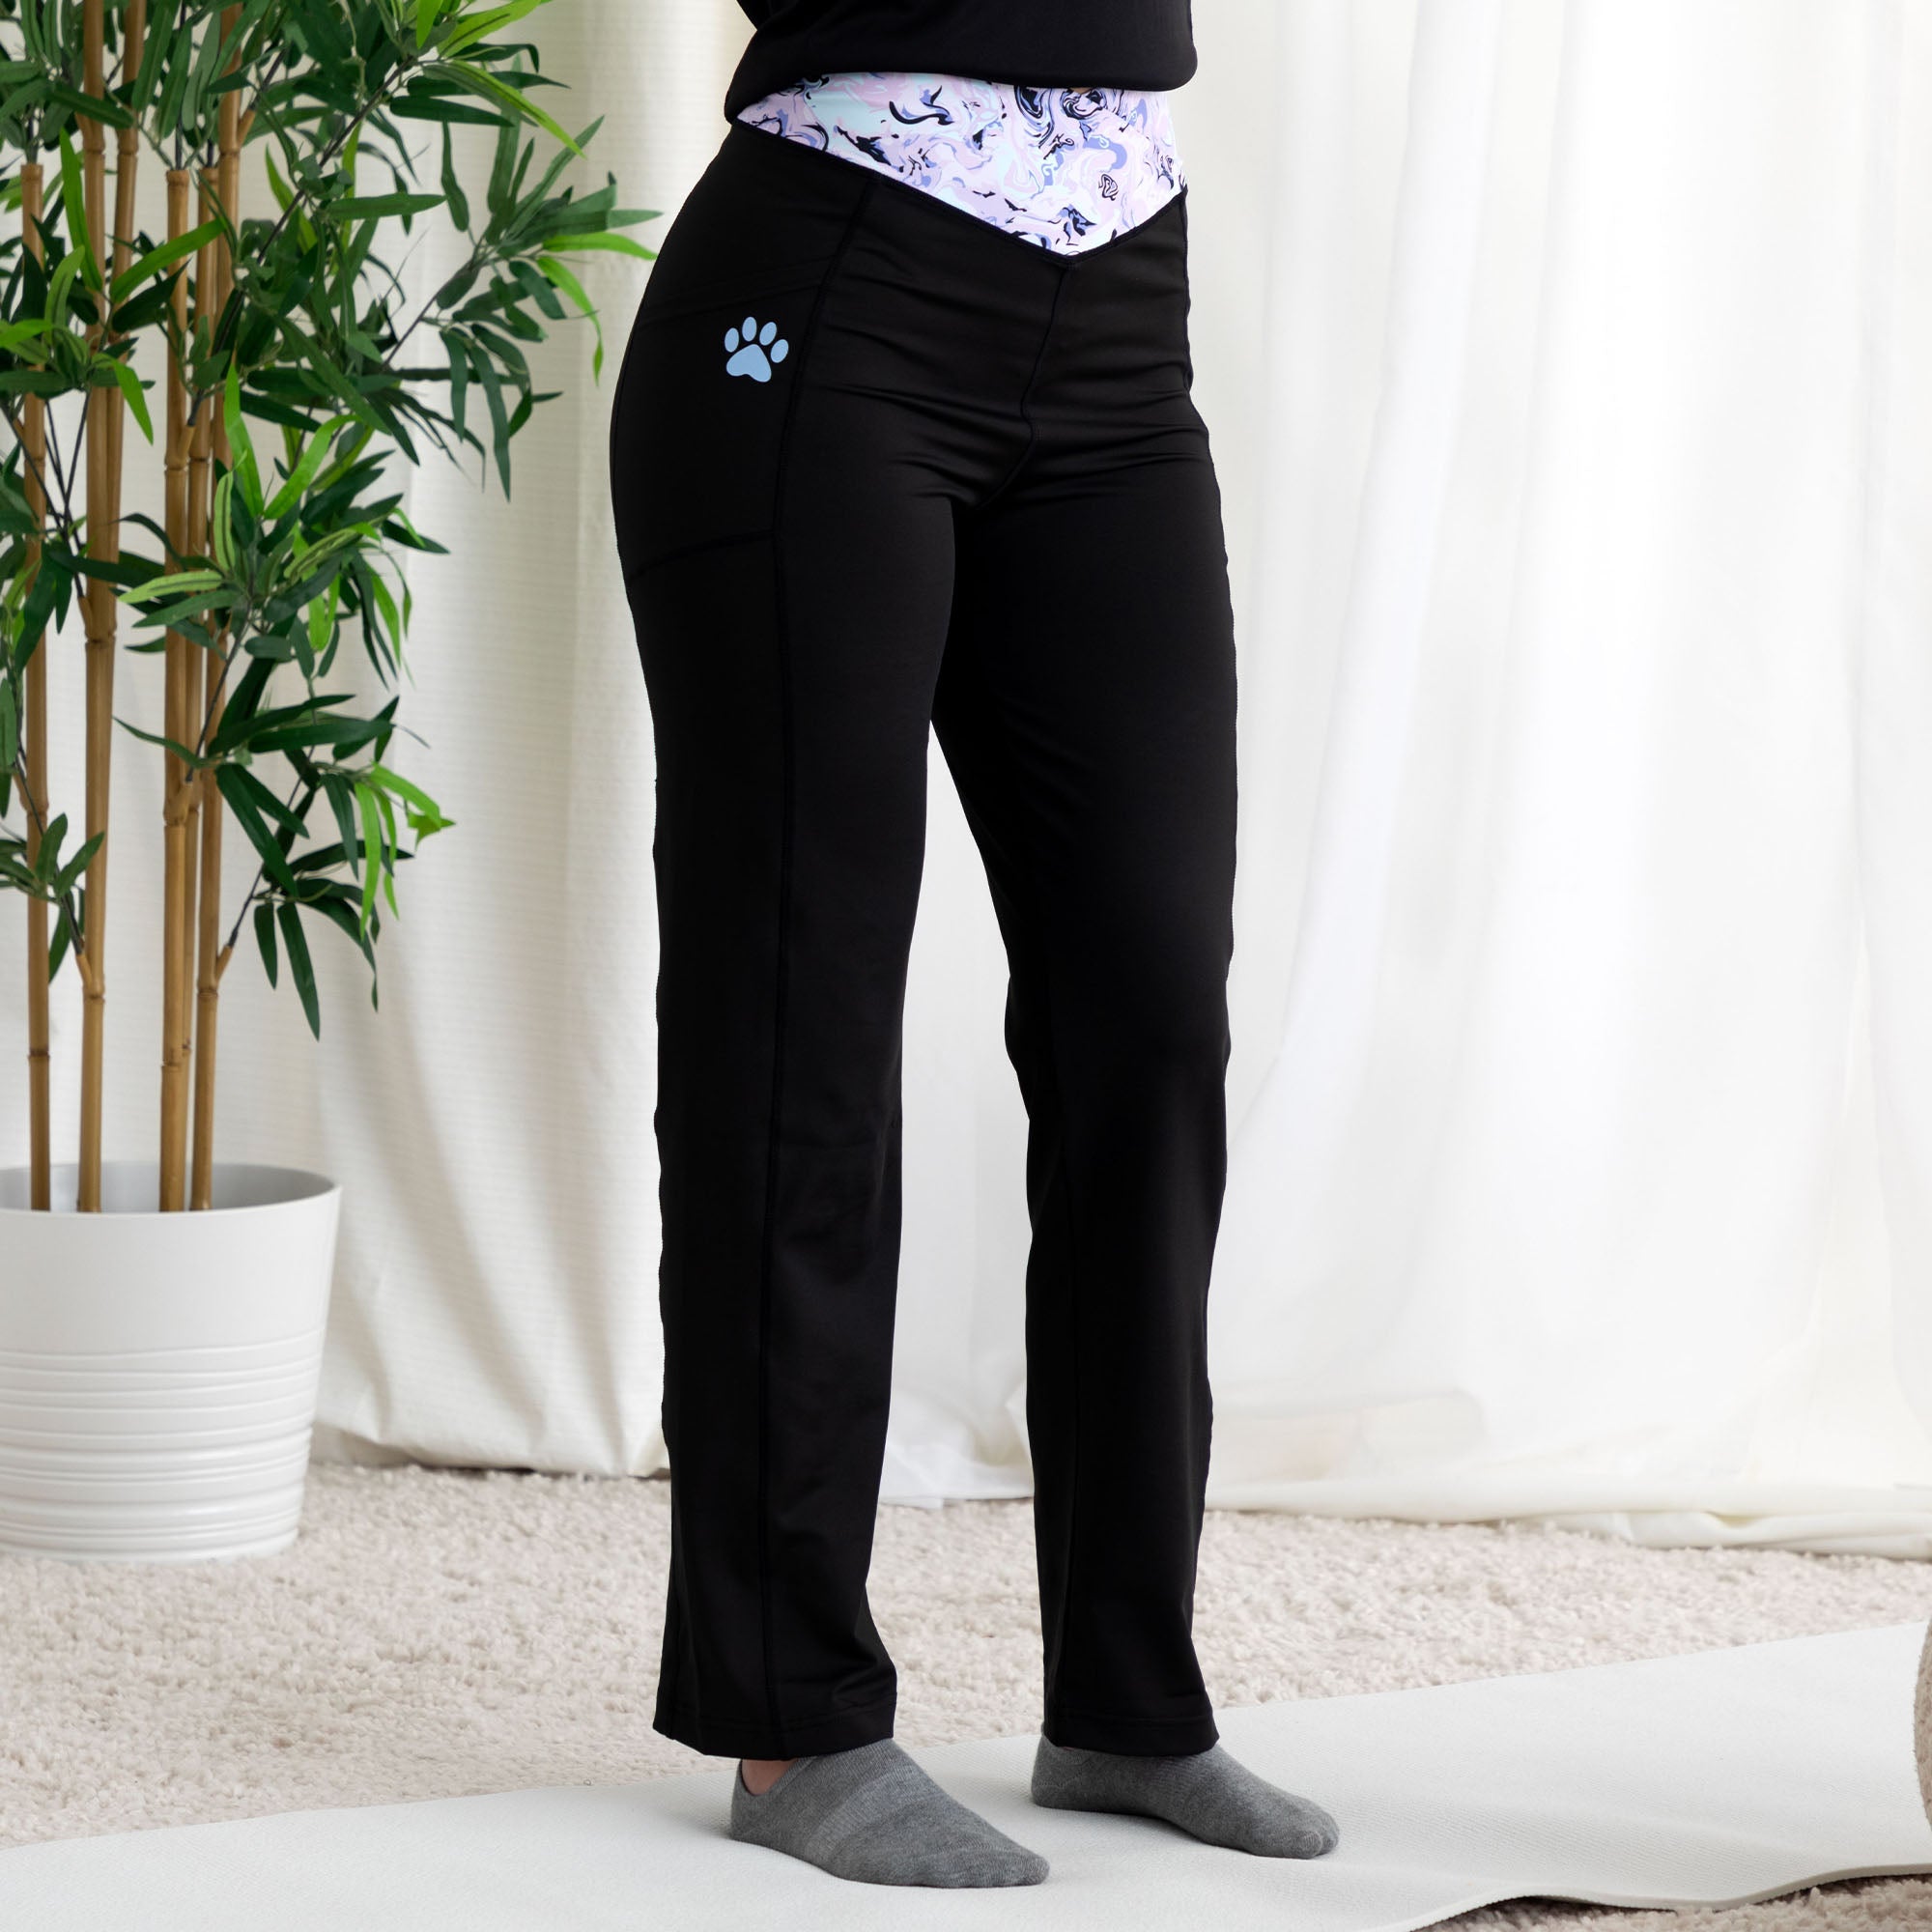 Yoga Paw Print Cross Over Separates - Black - Pants - M